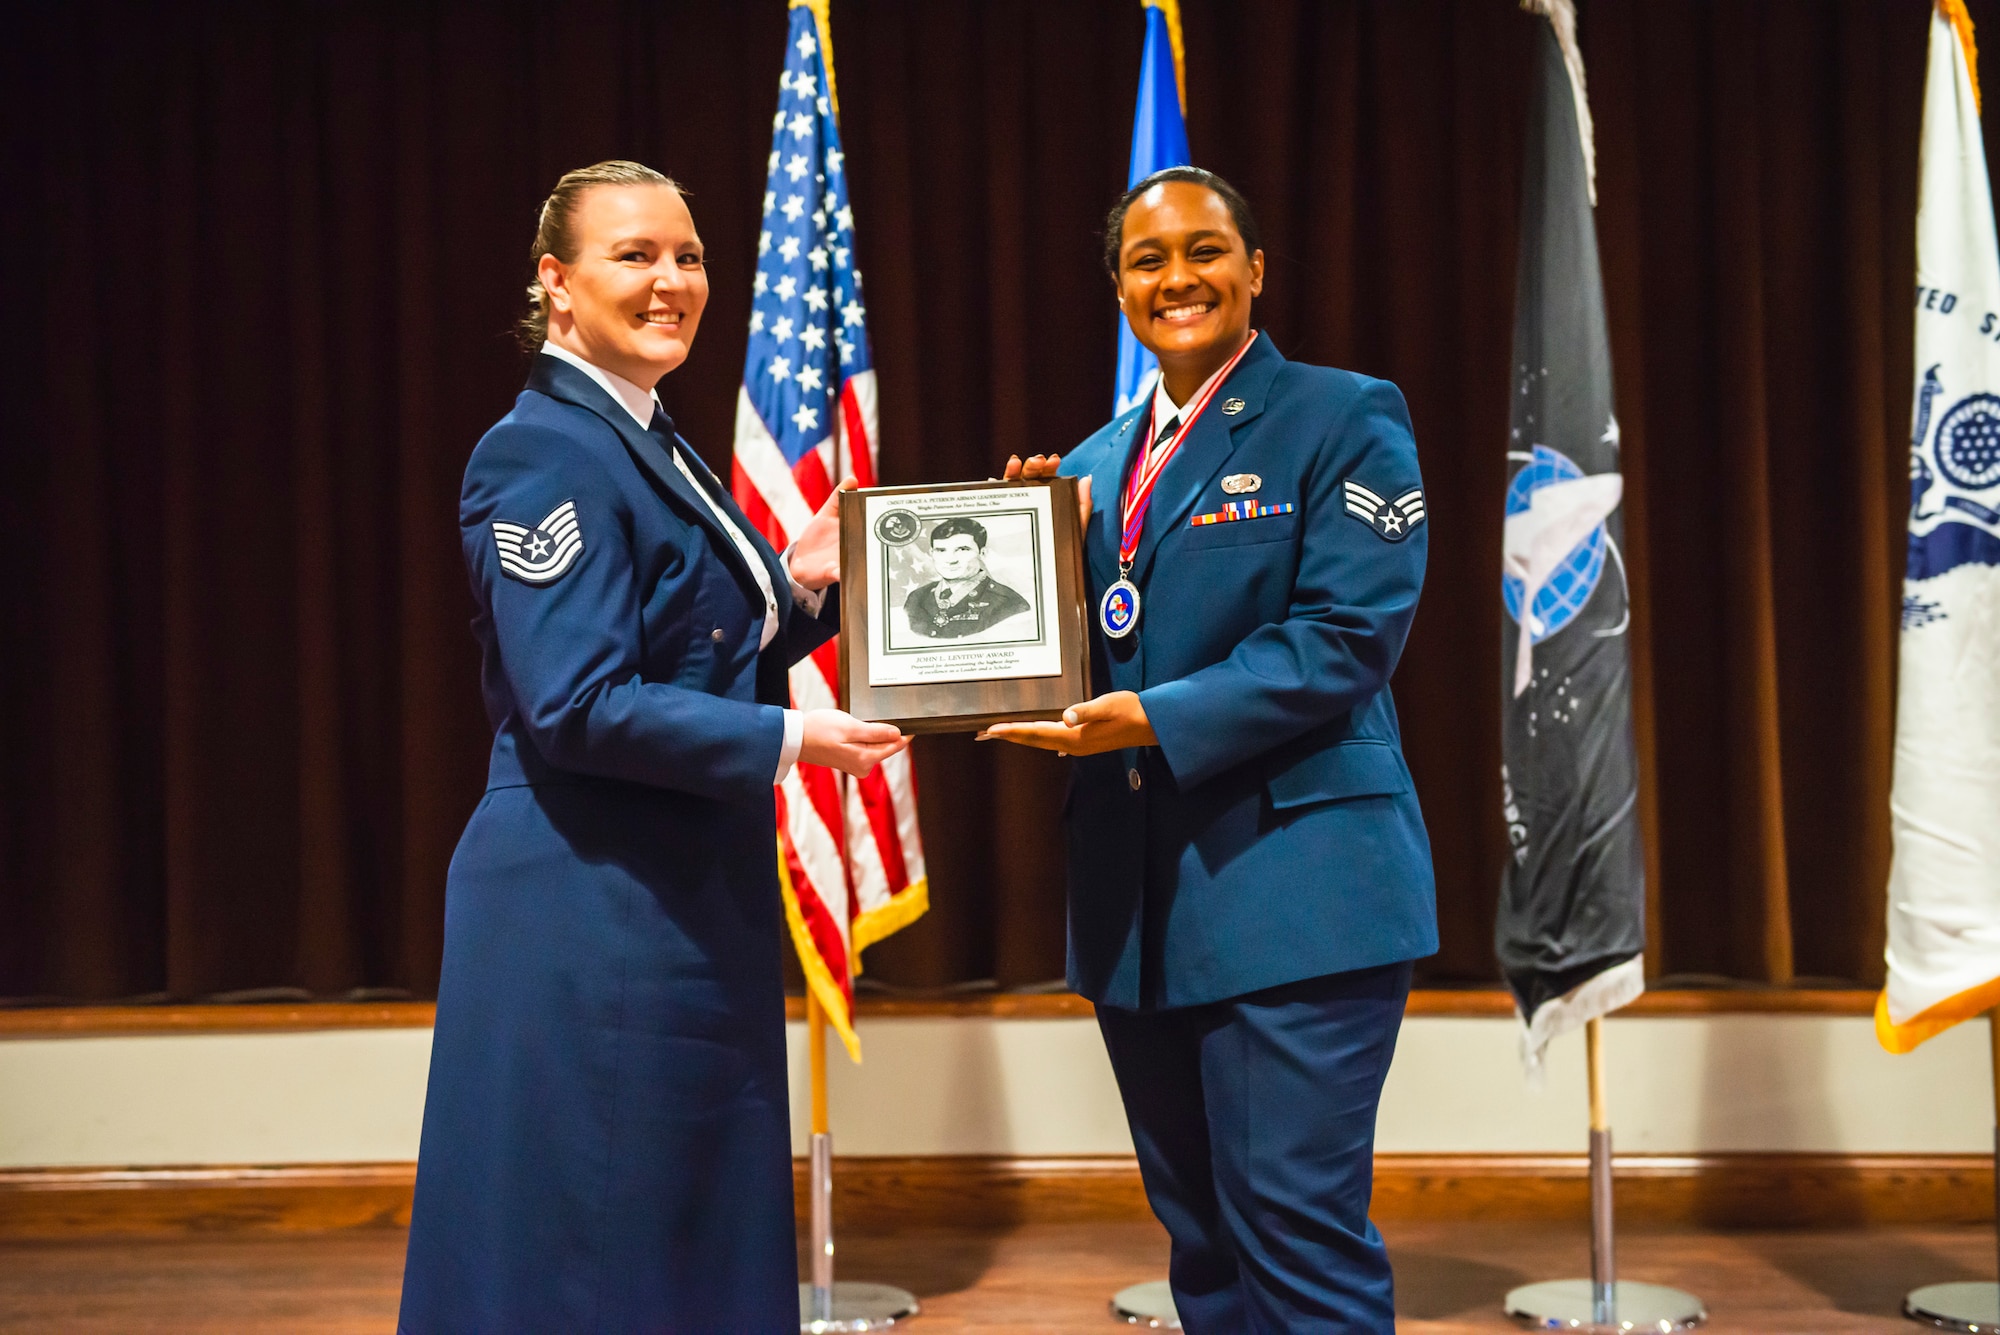 Airmen pose holding an award